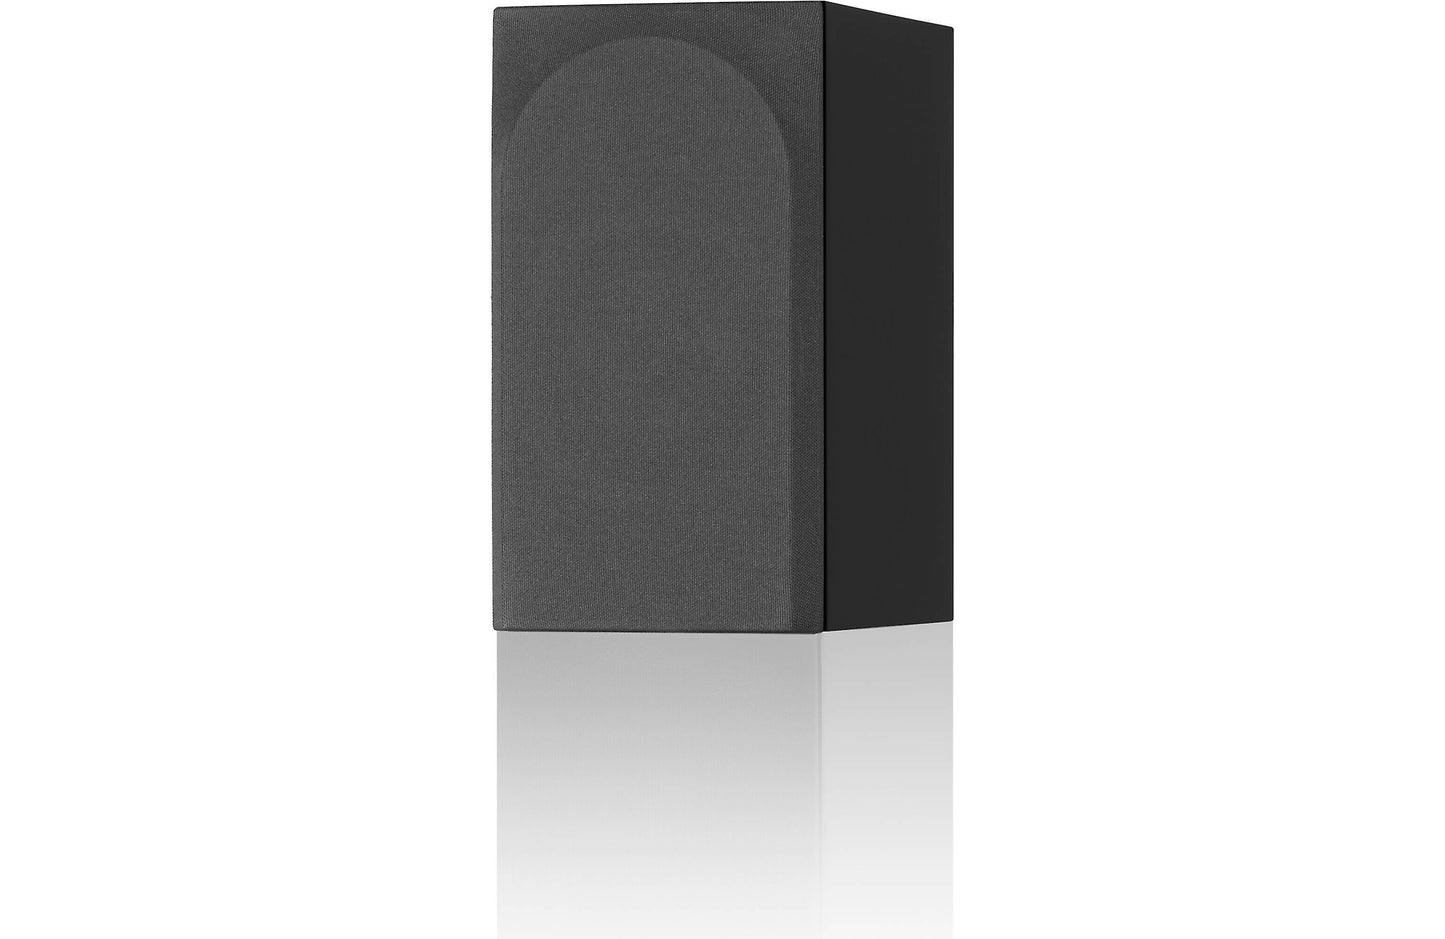 Bowers & Wilkins 707 S3 Bookshelf Speakers - pair - Gloss Black